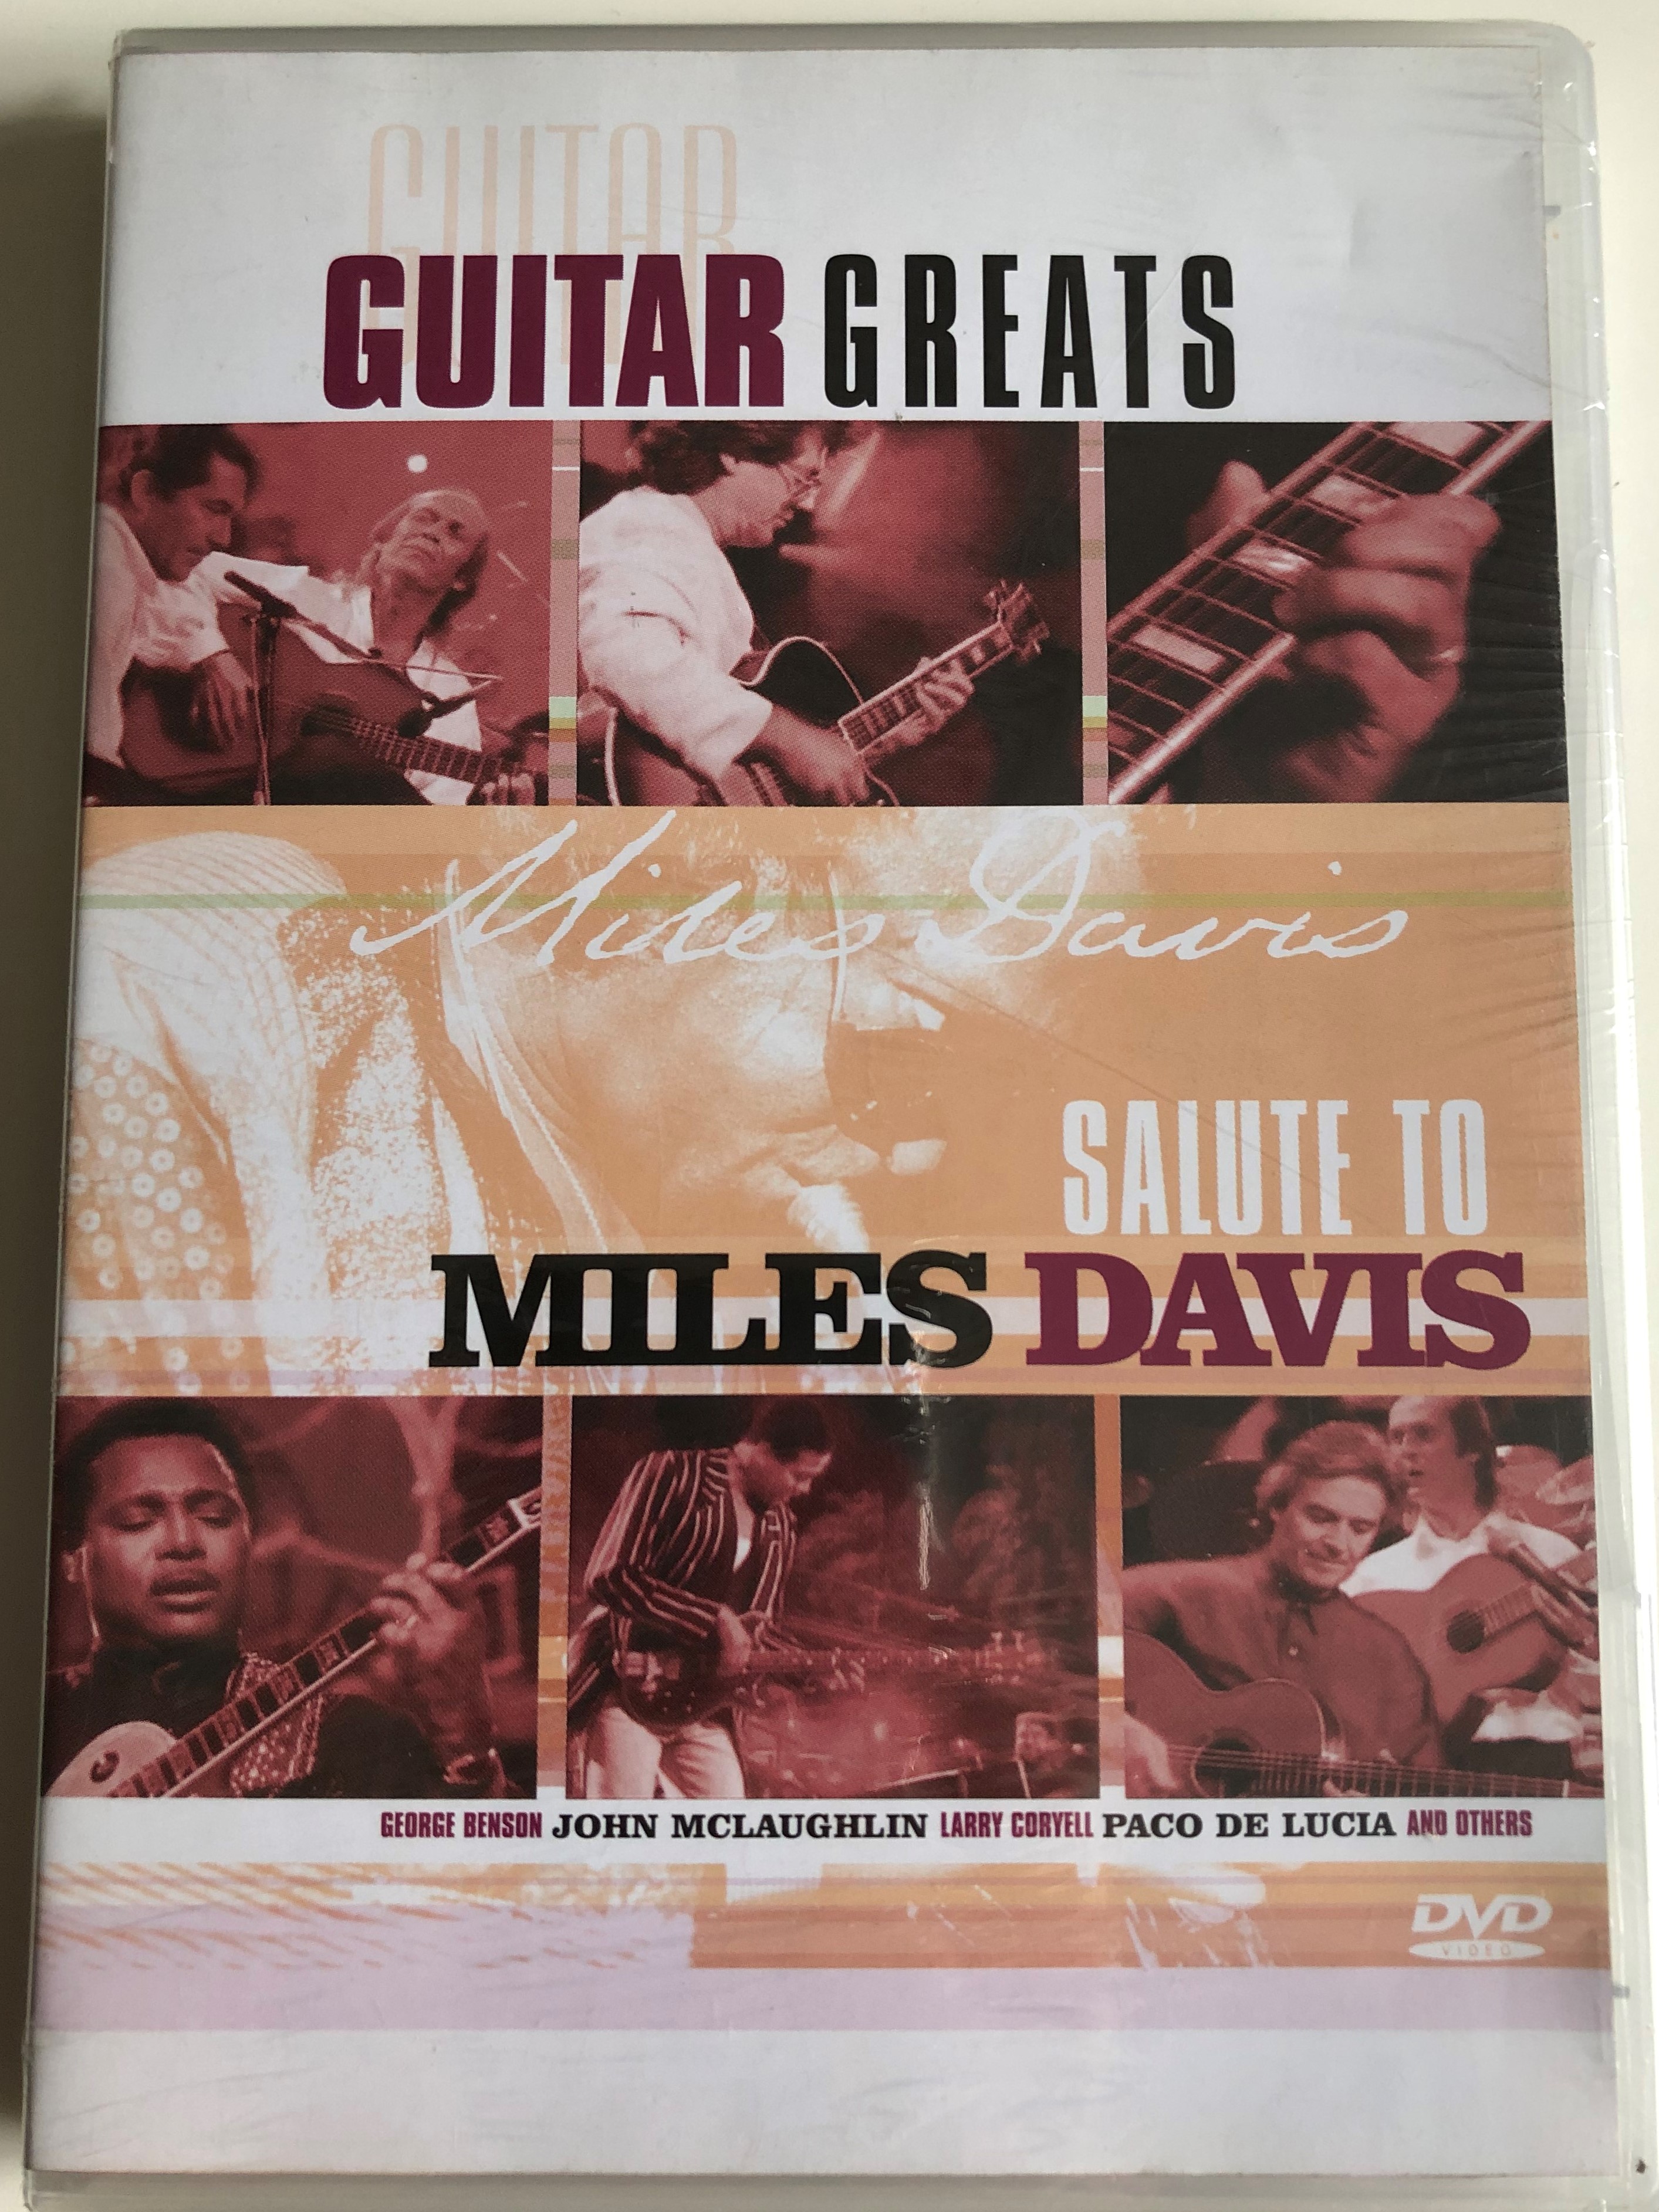 Guitar Greats - Salute to Miles Davis DVD 1992 1.JPG